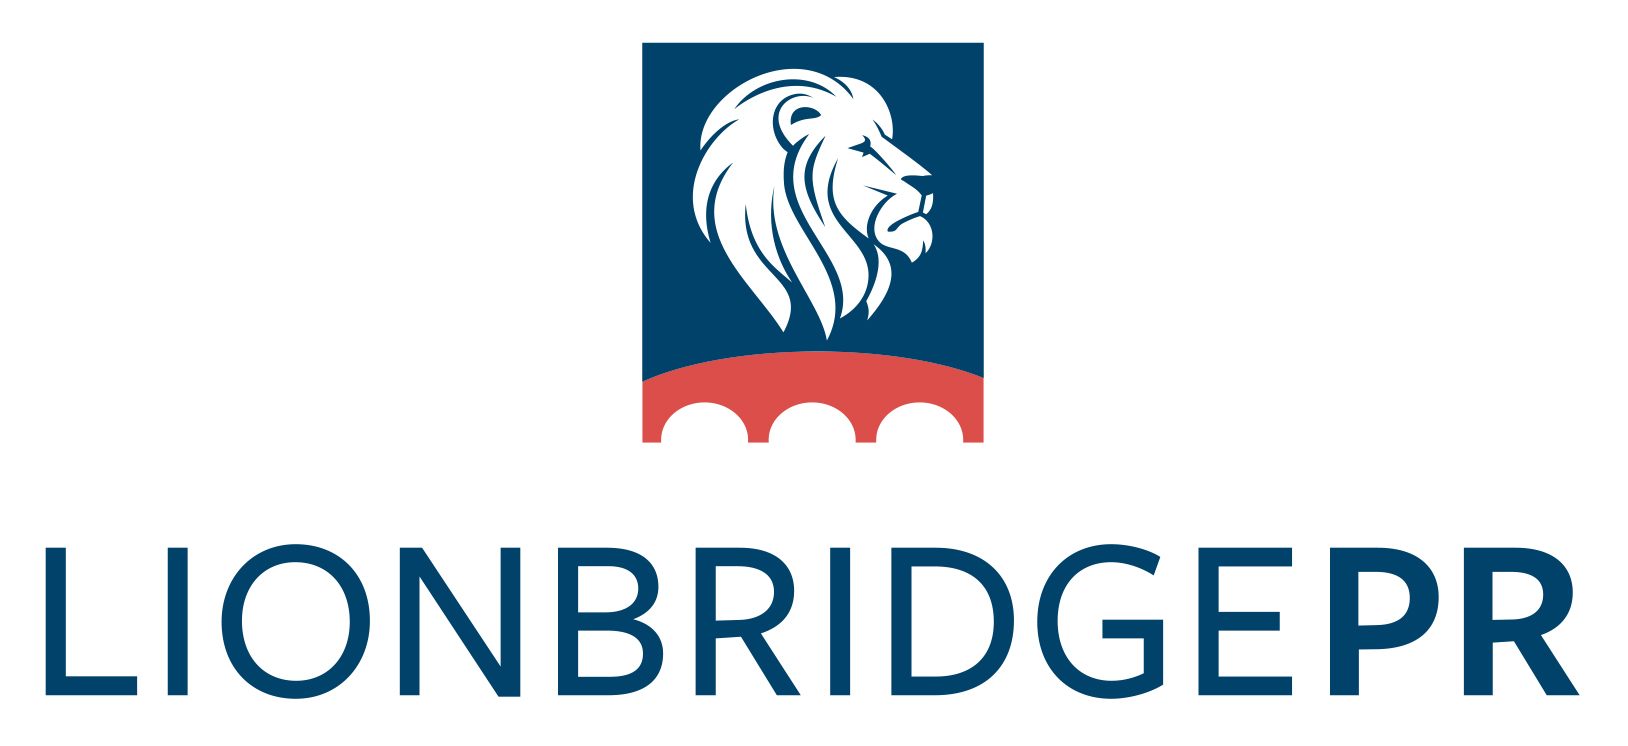 Lionbridge PR